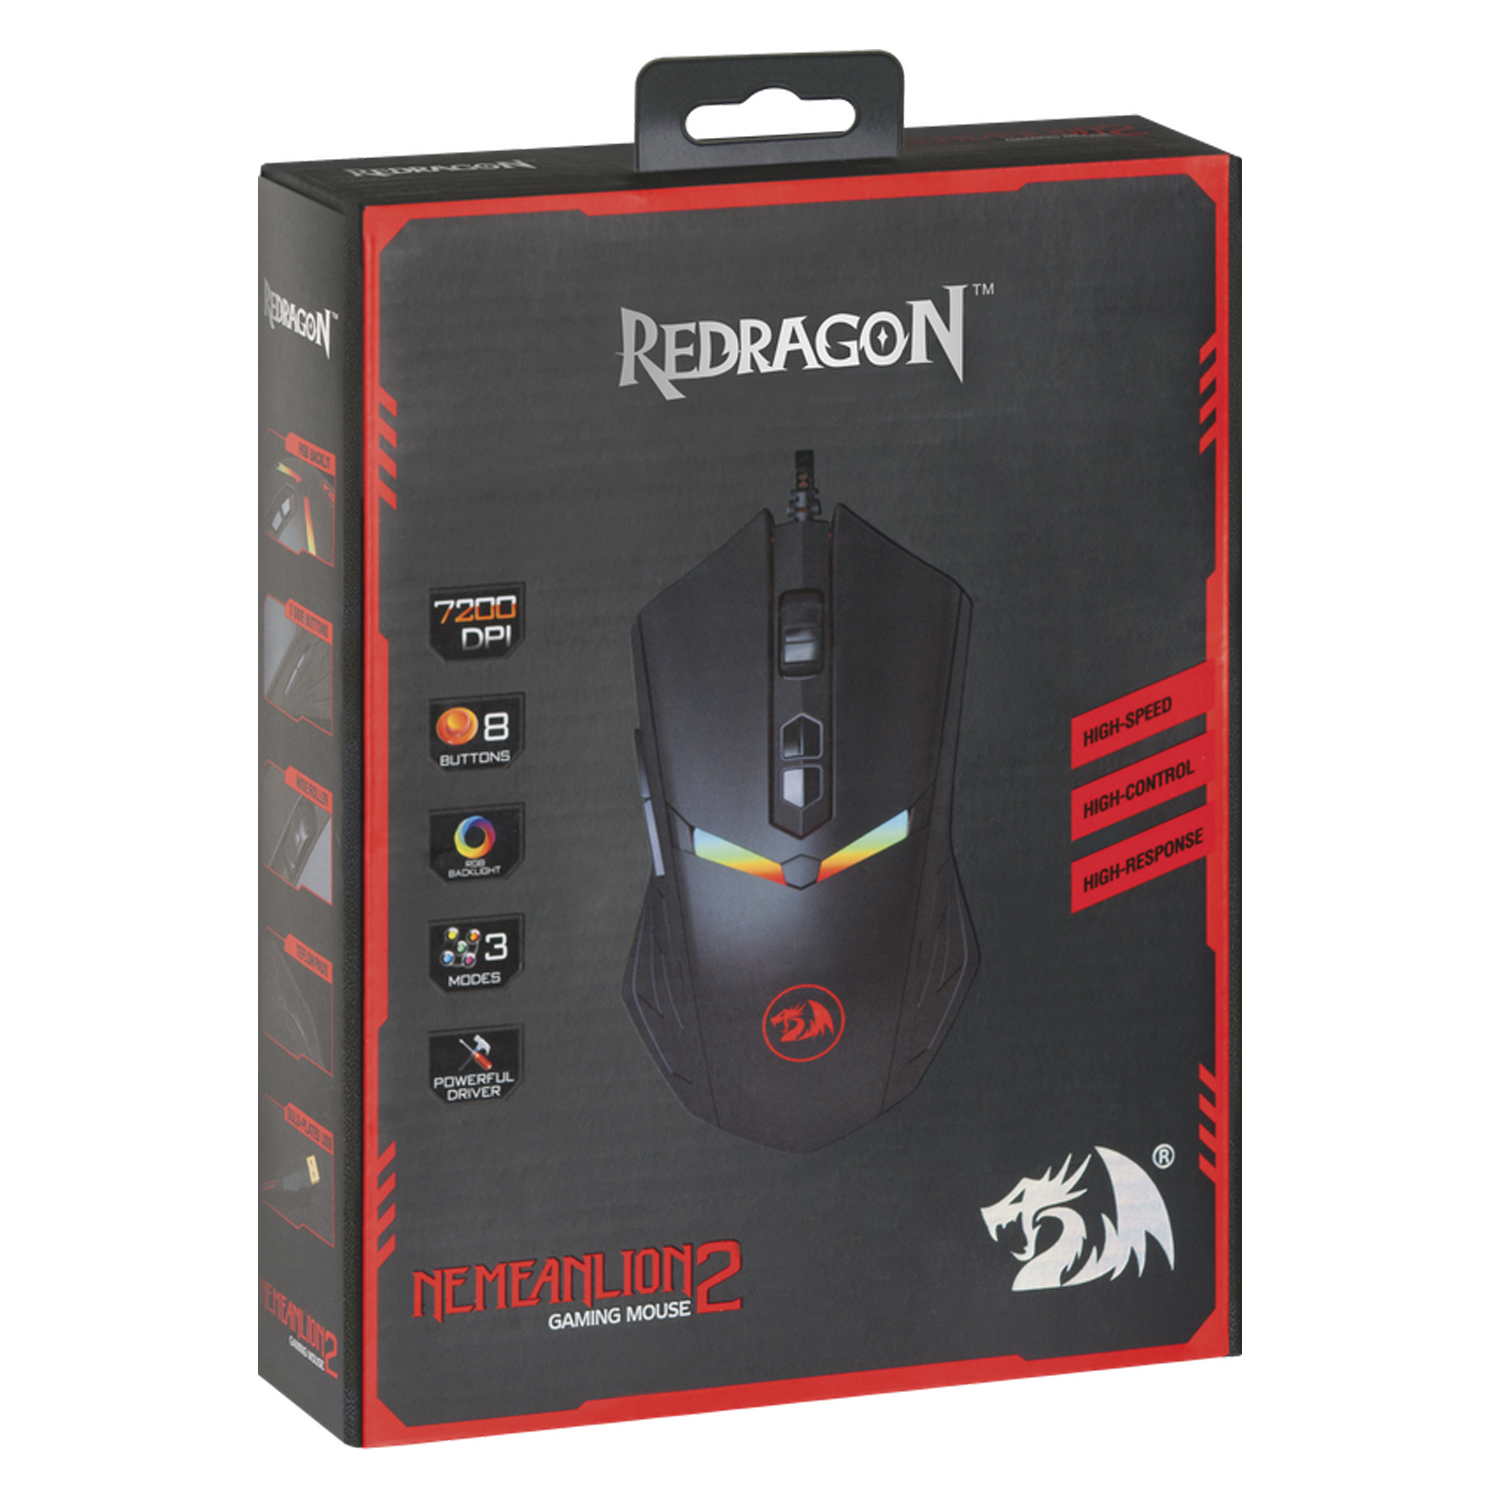 Mouse Gamer Redragon Nemeanlion 2 - Preto (M602-1)